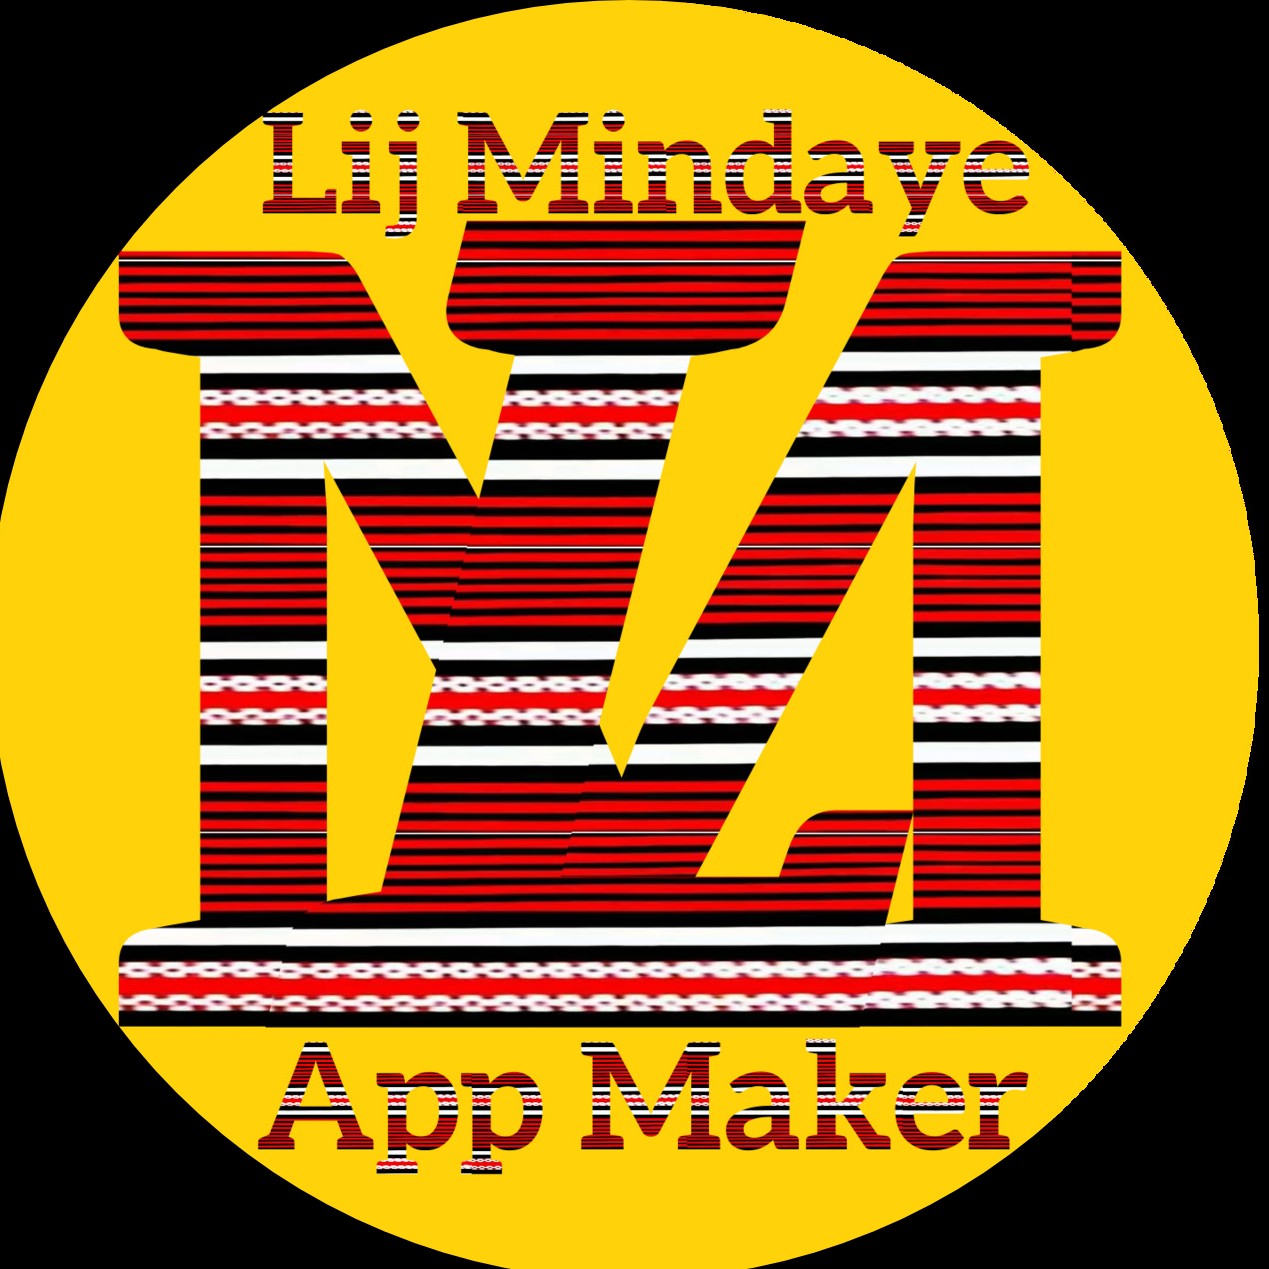 Lij Mindaye's profile image